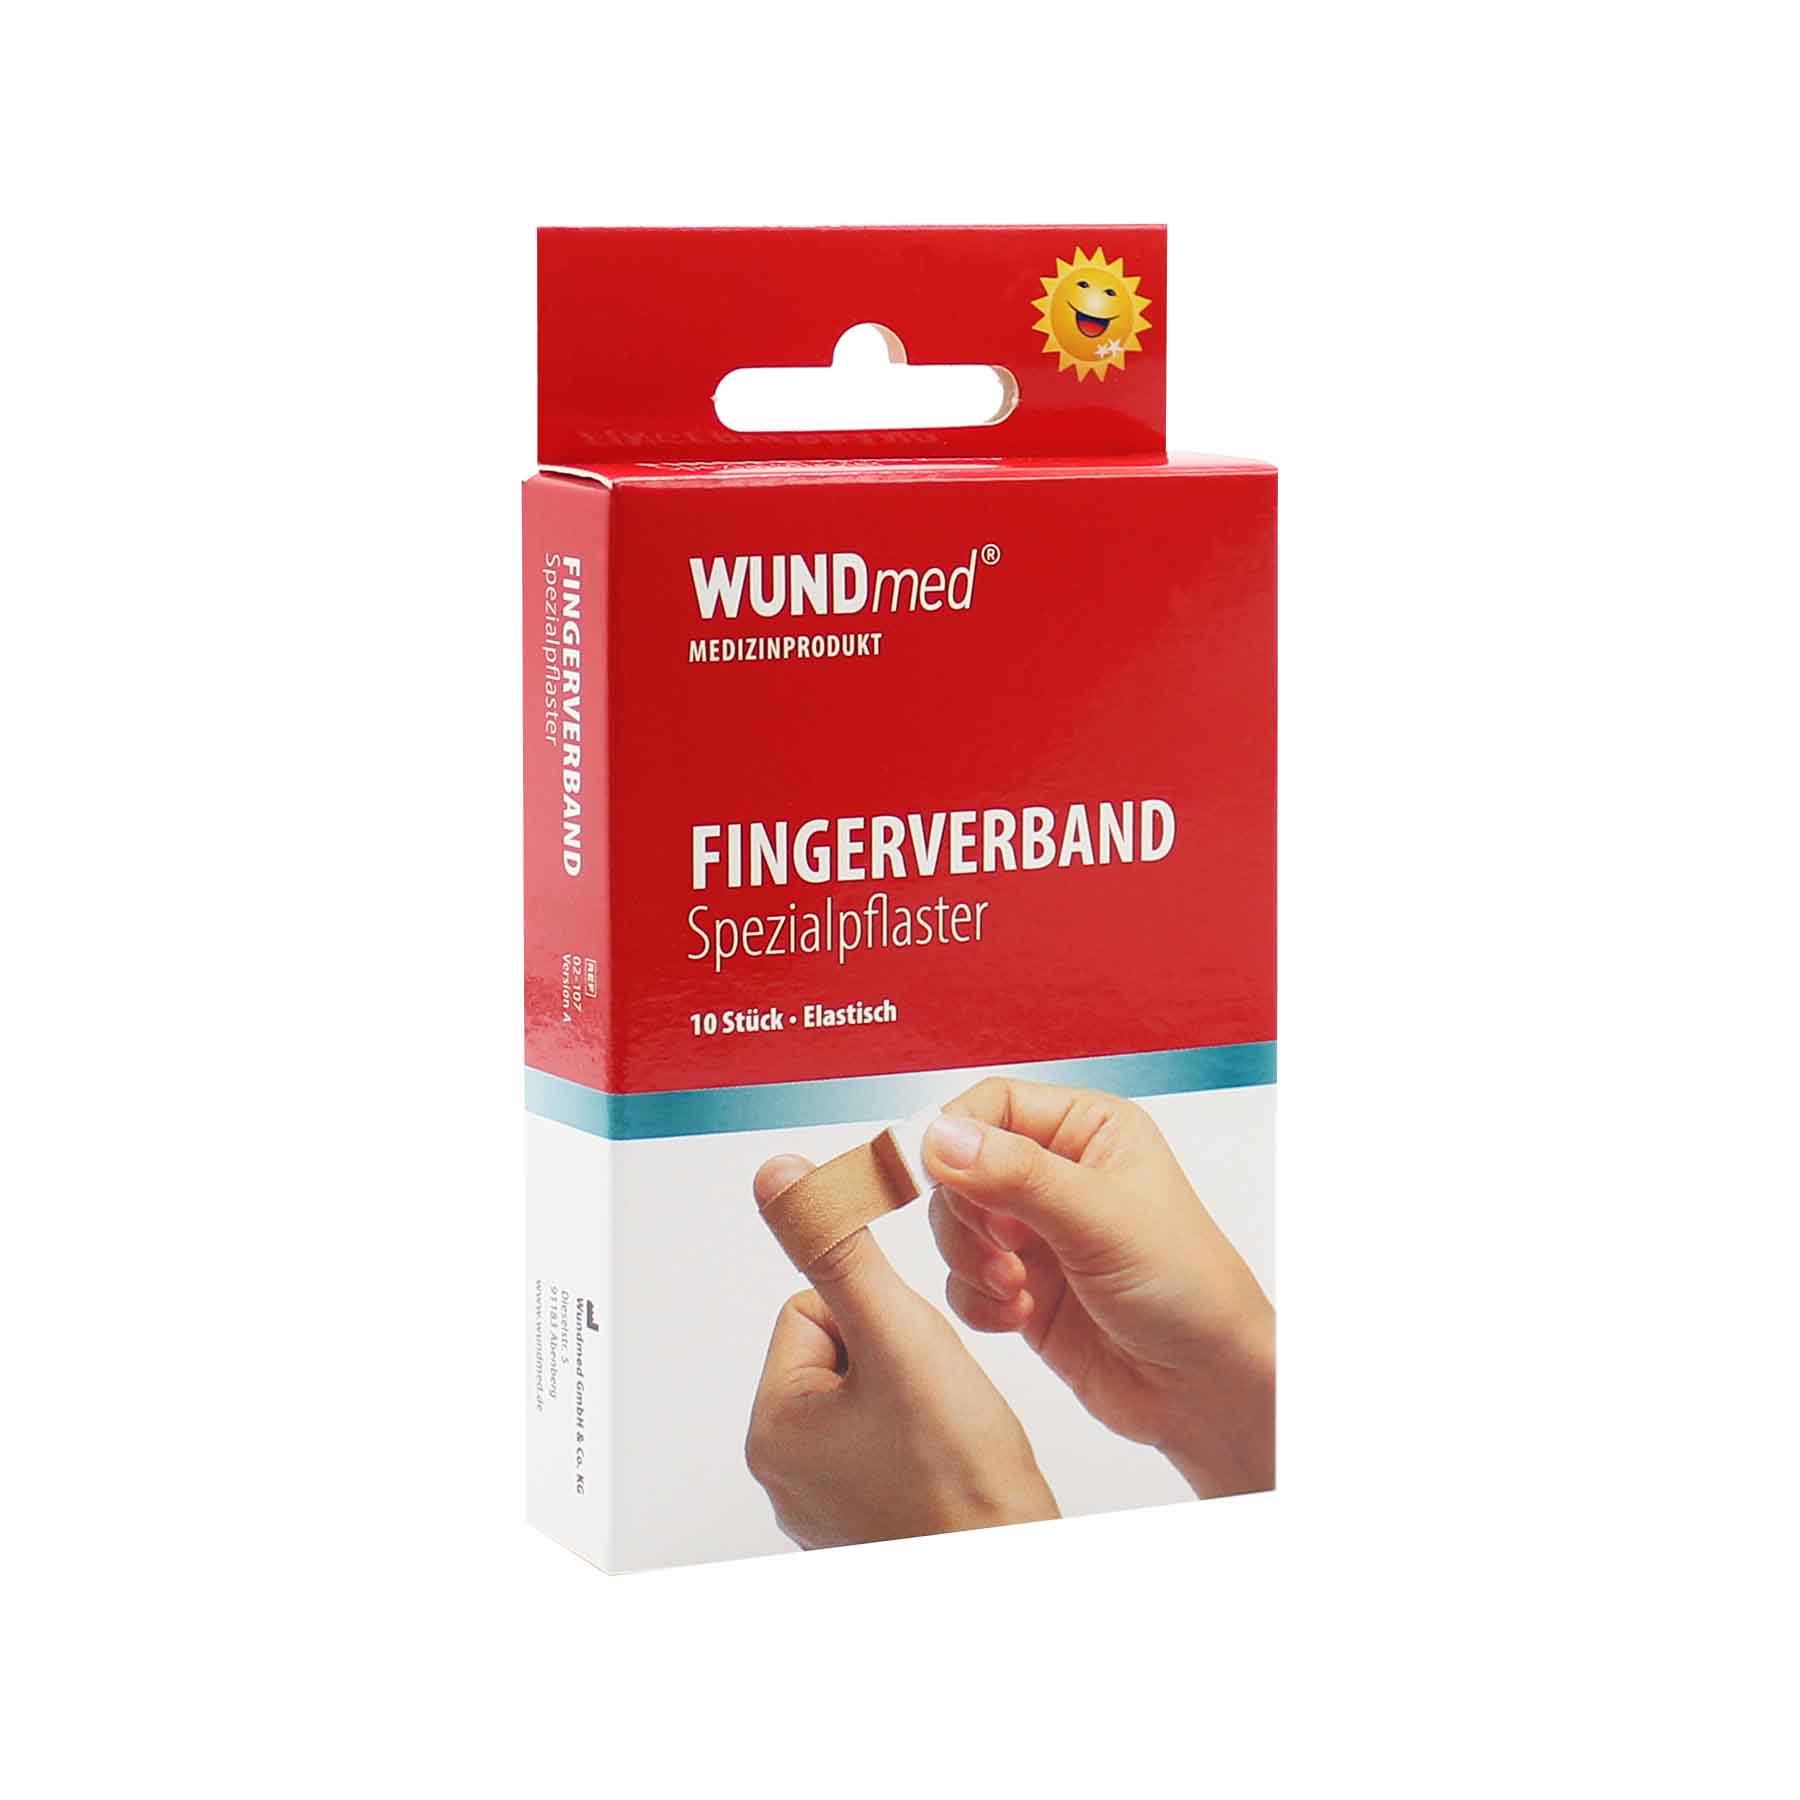 WUNDmed® Spezialpflaster "Fingerverband" 10 Stück/Packung